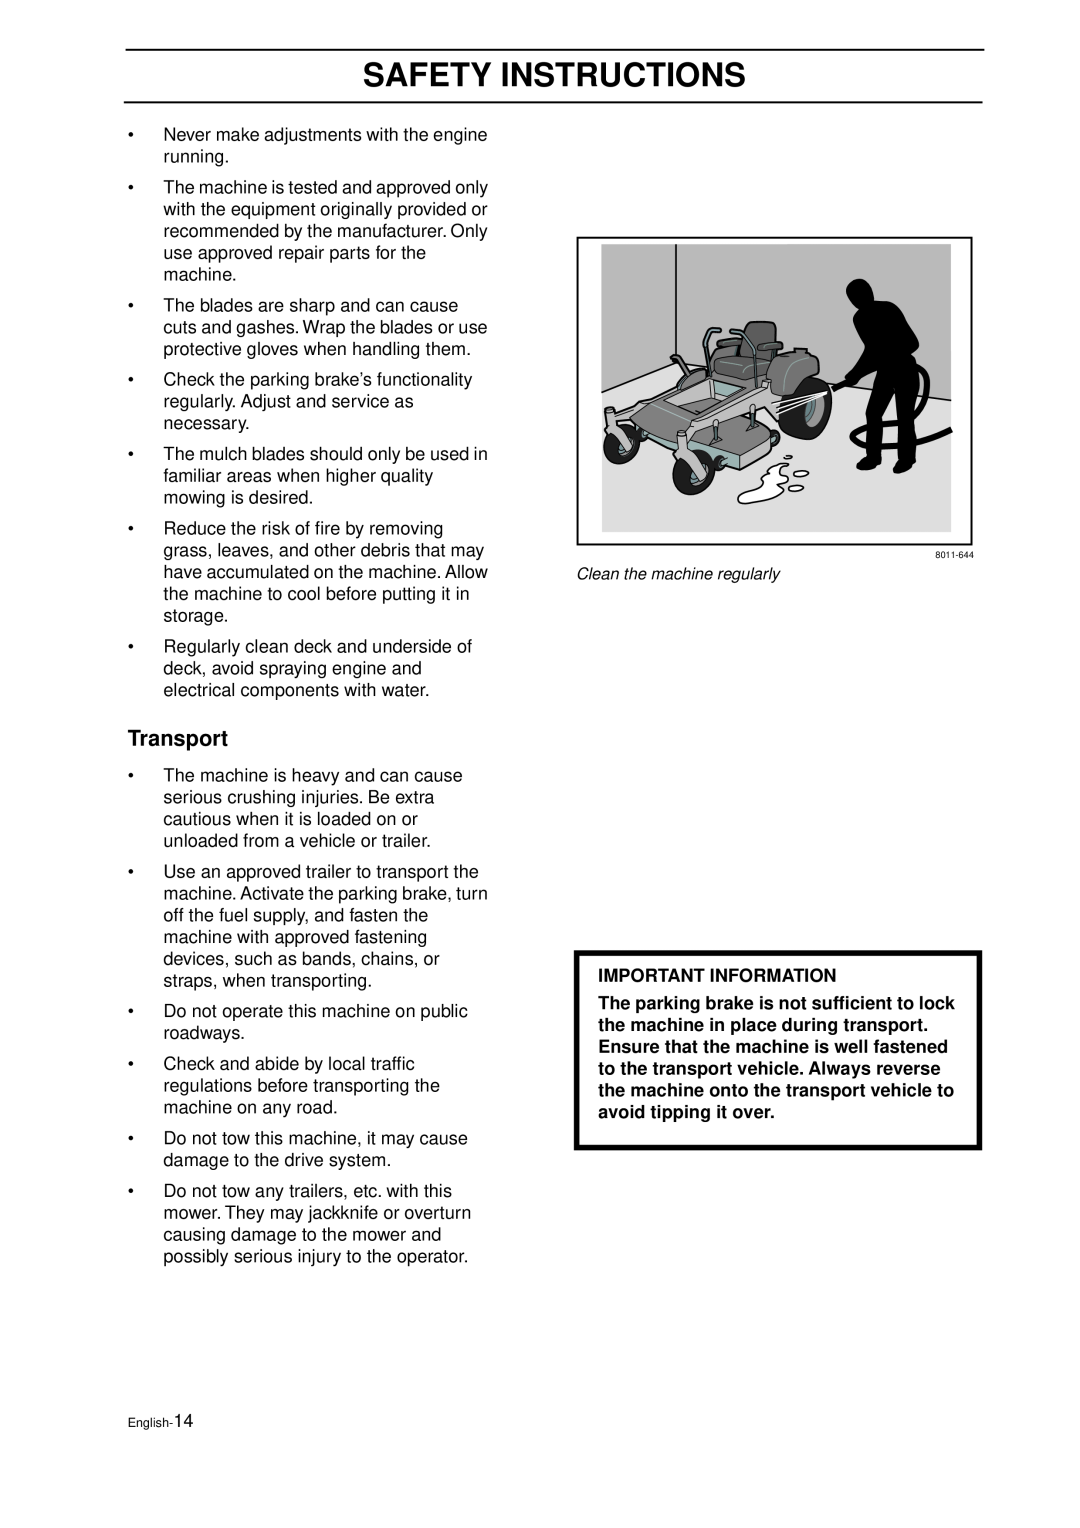 Husqvarna IZ 21 manual Transport, Important Information, Safety Instructions 